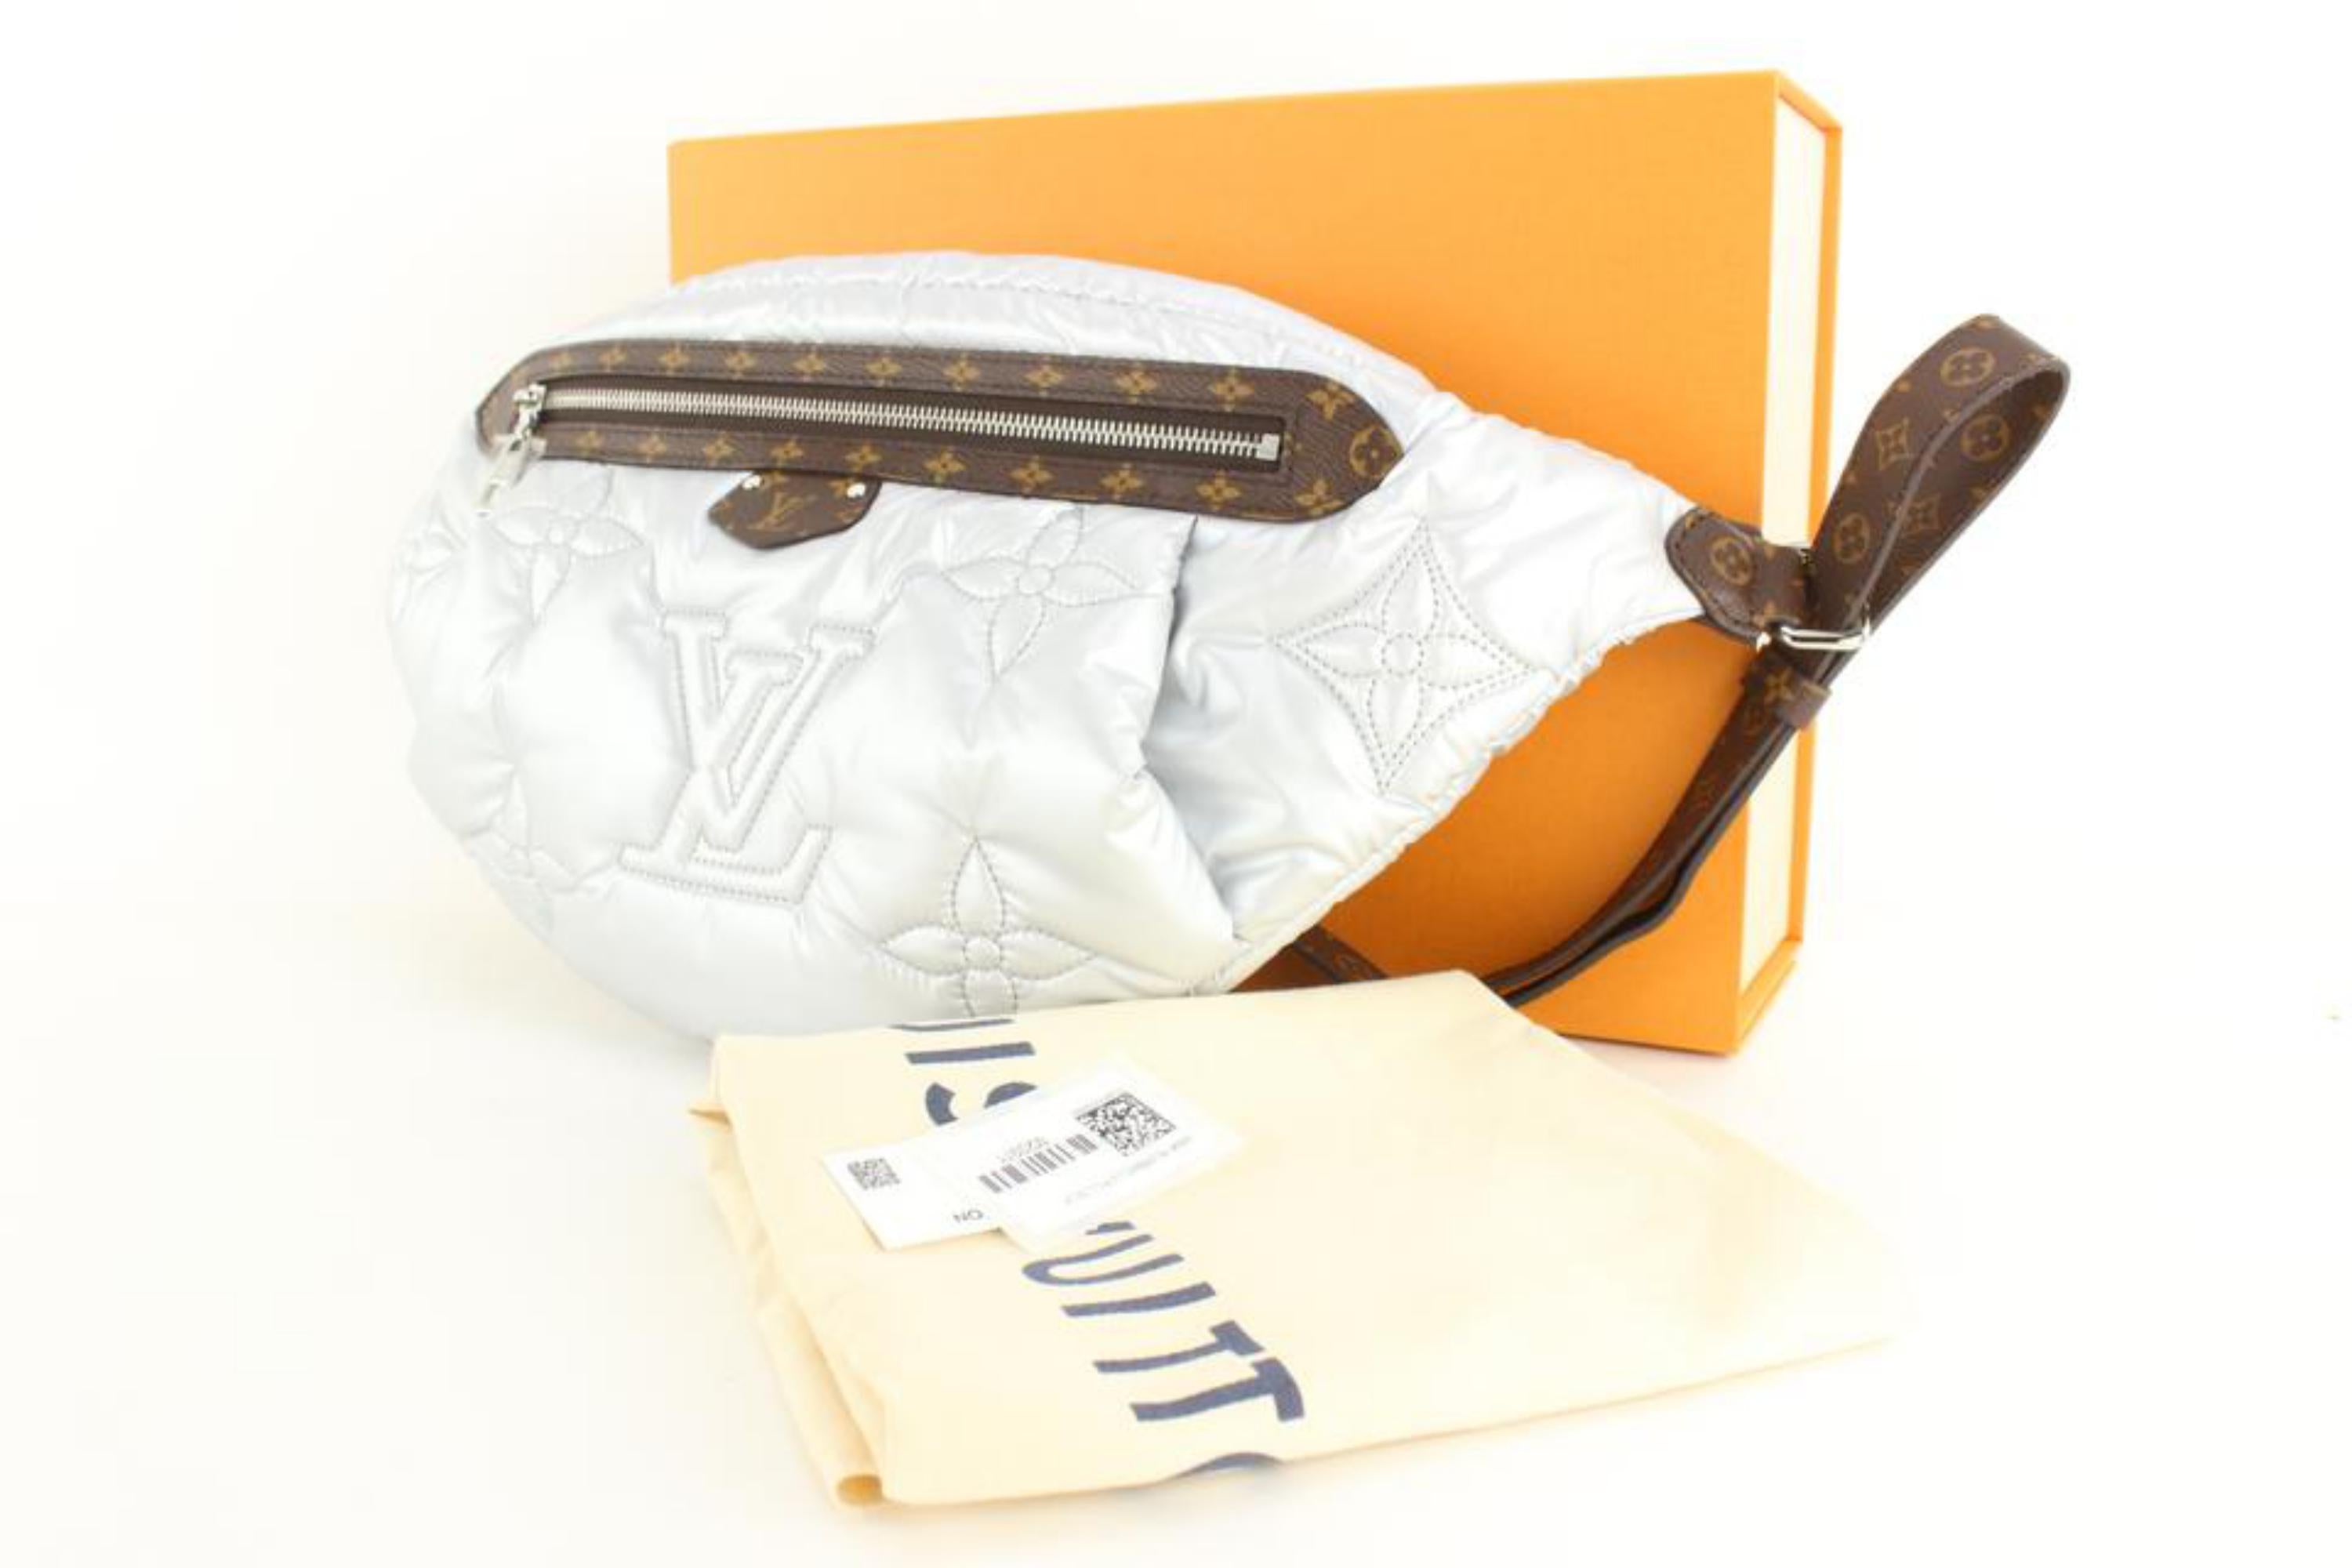 New Louis Vuitton Bum Bag Review 2023 